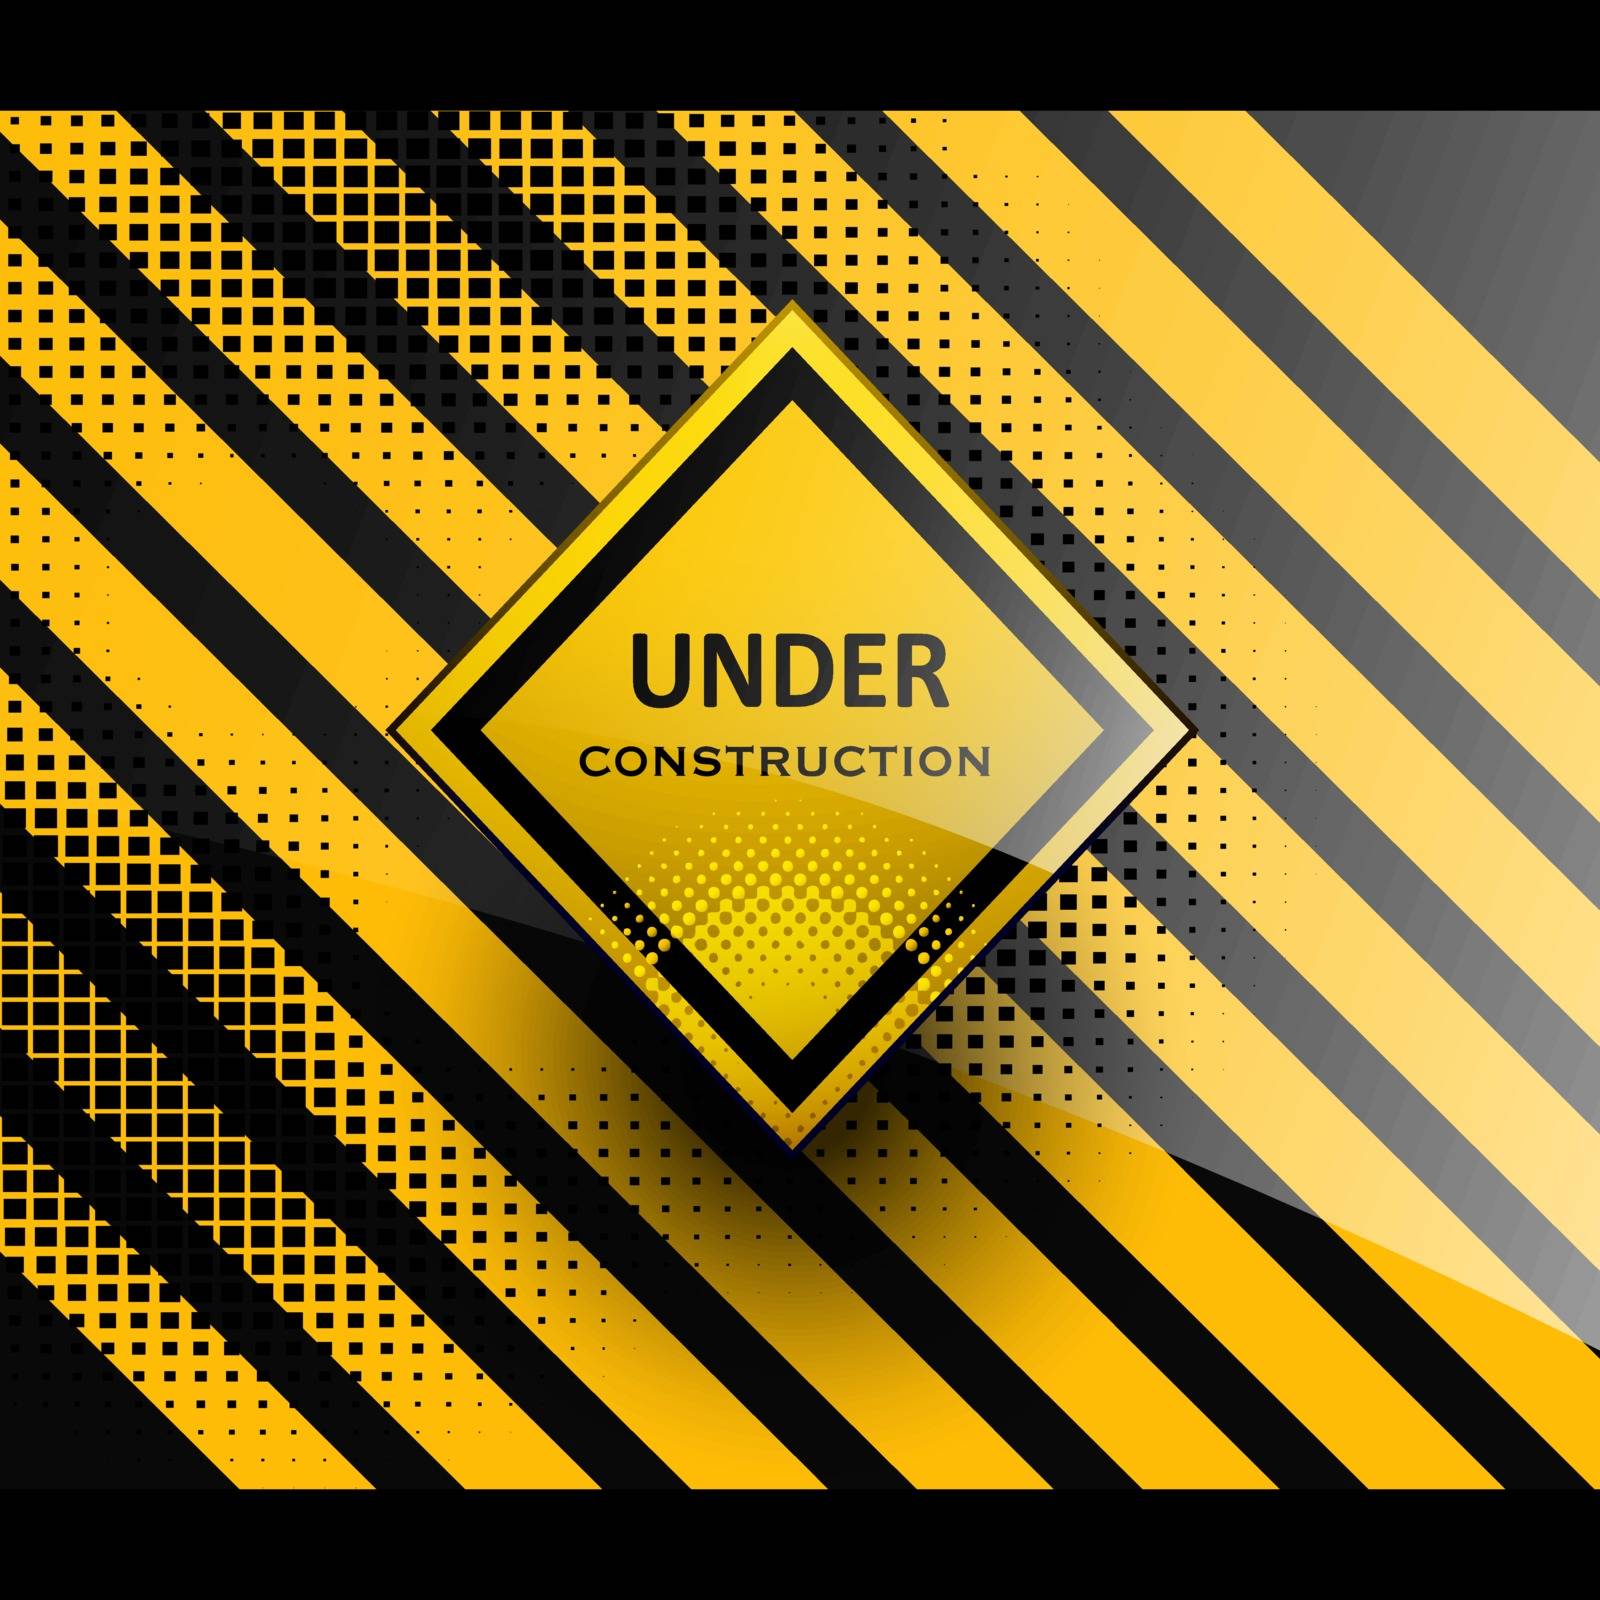 Under construction background. Vector illustration, EPS 10